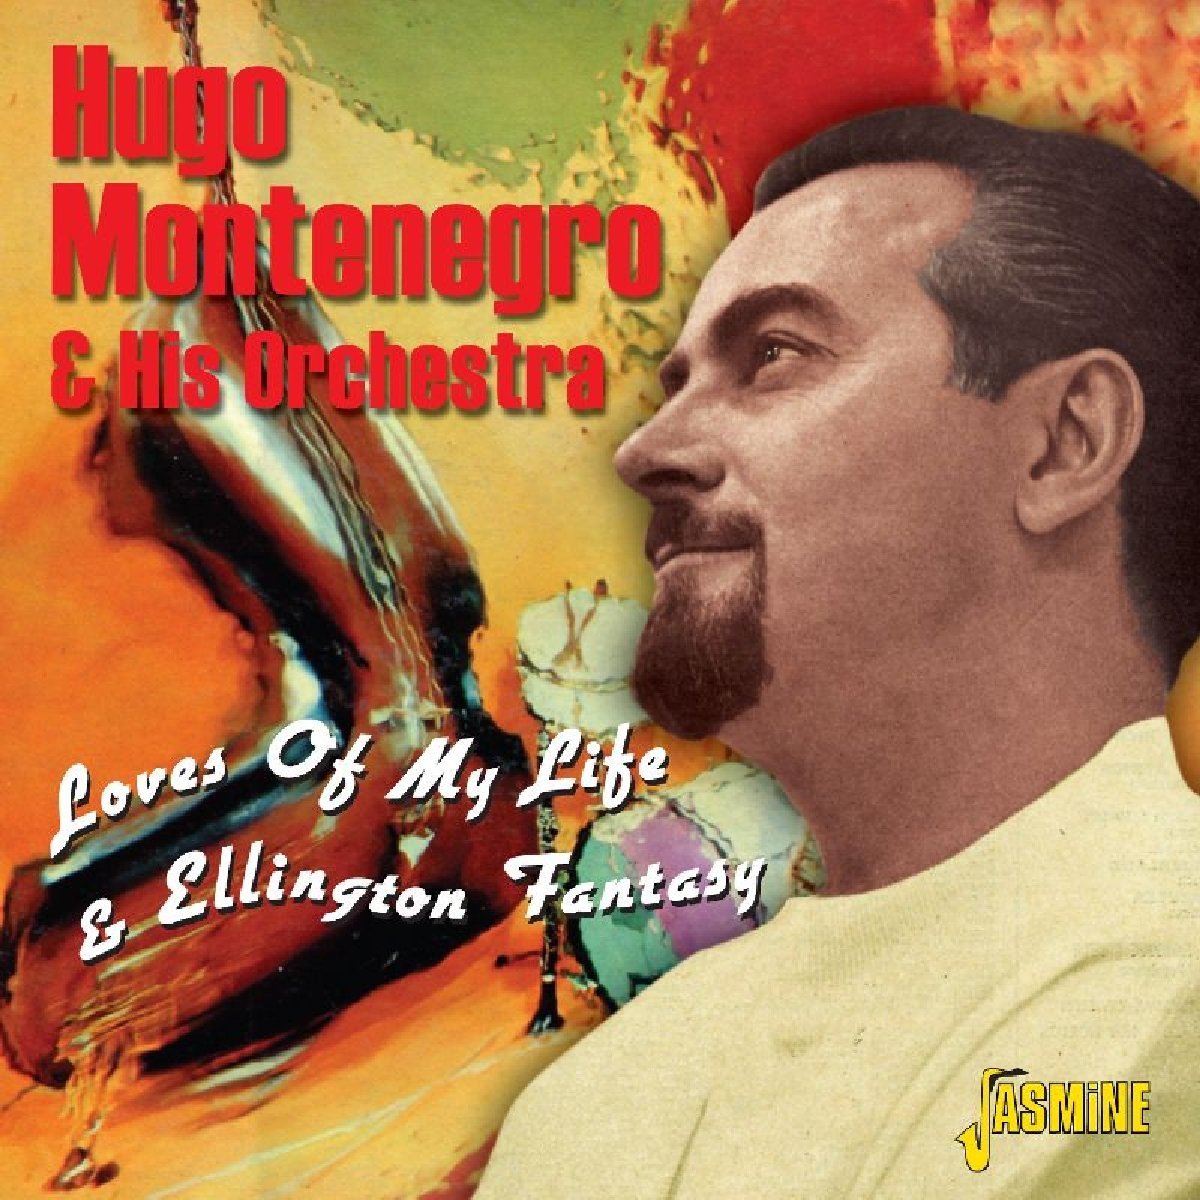 Hugo me. Hugo Montenegro фото. Монтенегро 1981. Hugo Montenegro solo's Samba.